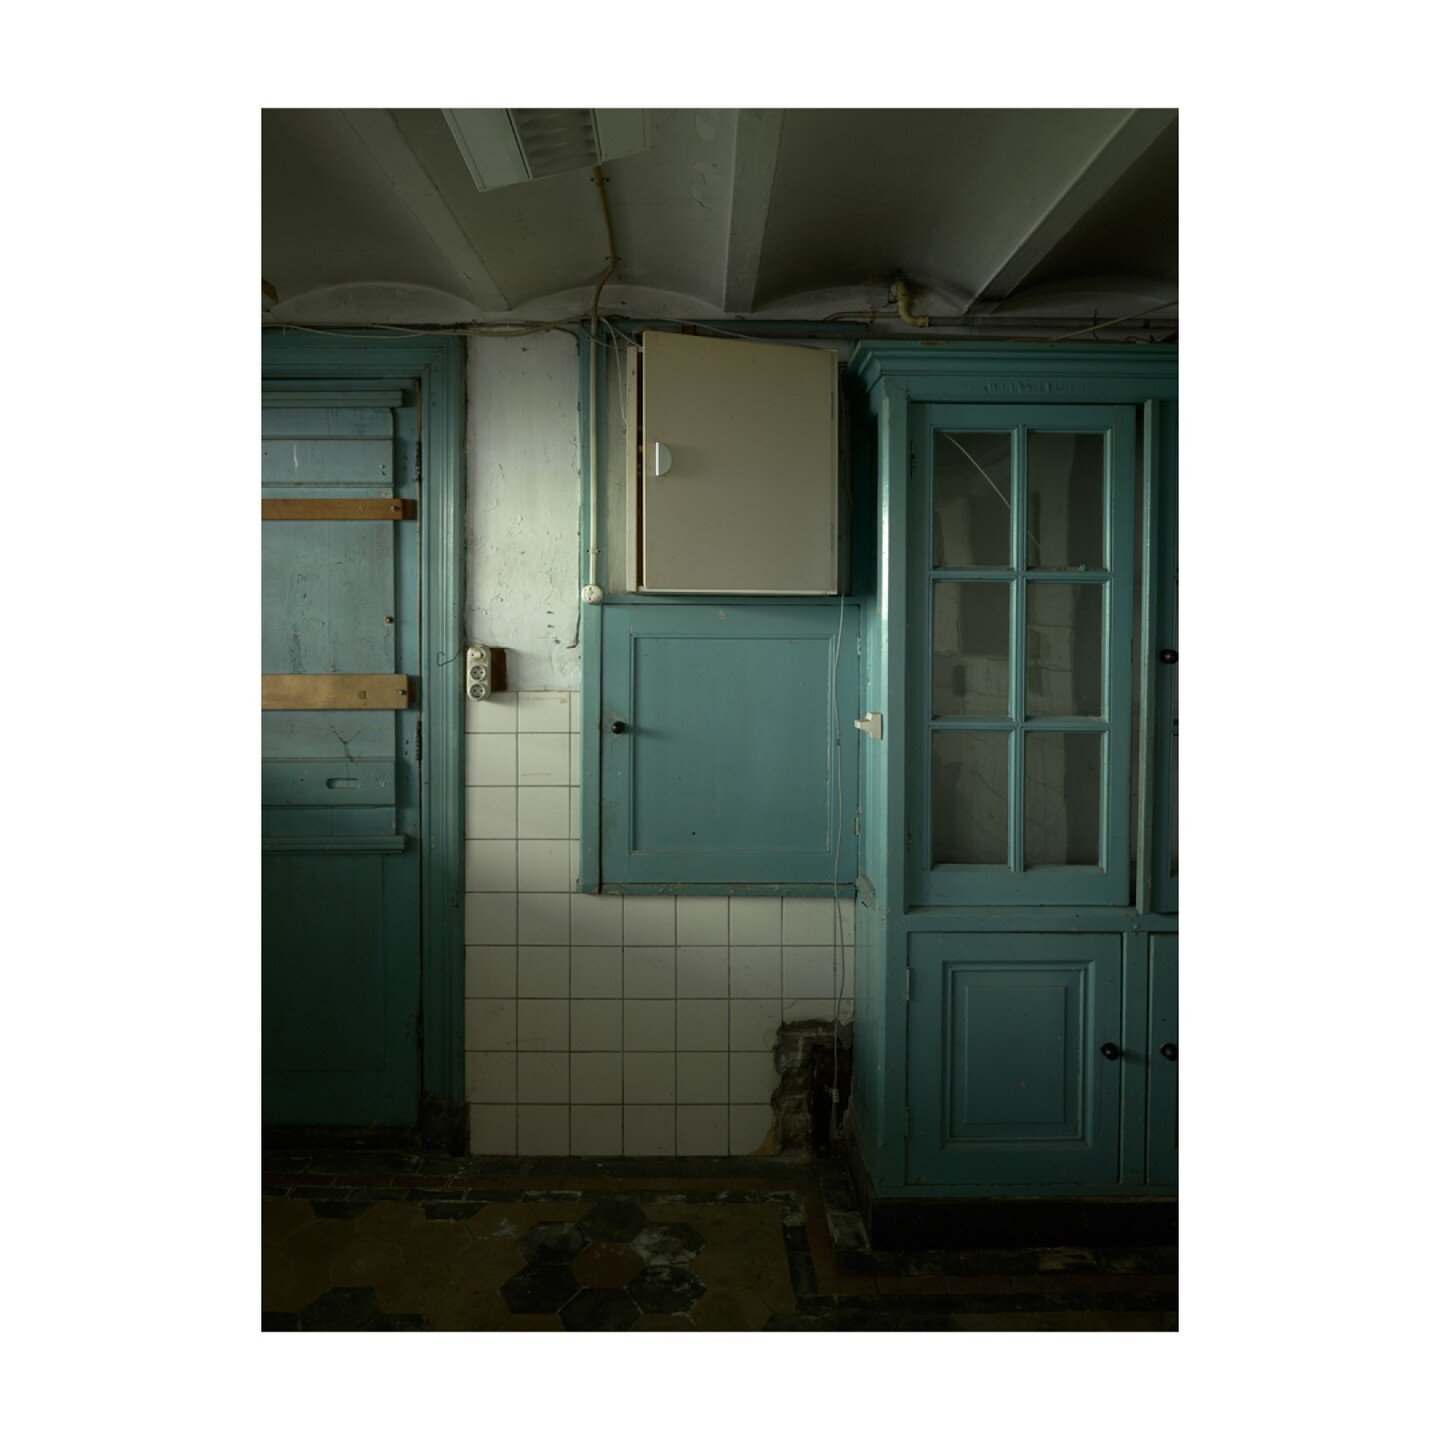 May 2023, Utrecht, shot for @sergeschoemaker.architects
.
.
.
.
#architecture #architecturephotography #photography #interior #interiors #furniture #homeinterior #basement #gloomy #daylight #window #building #door #wood #blueish #lowlight #shadows